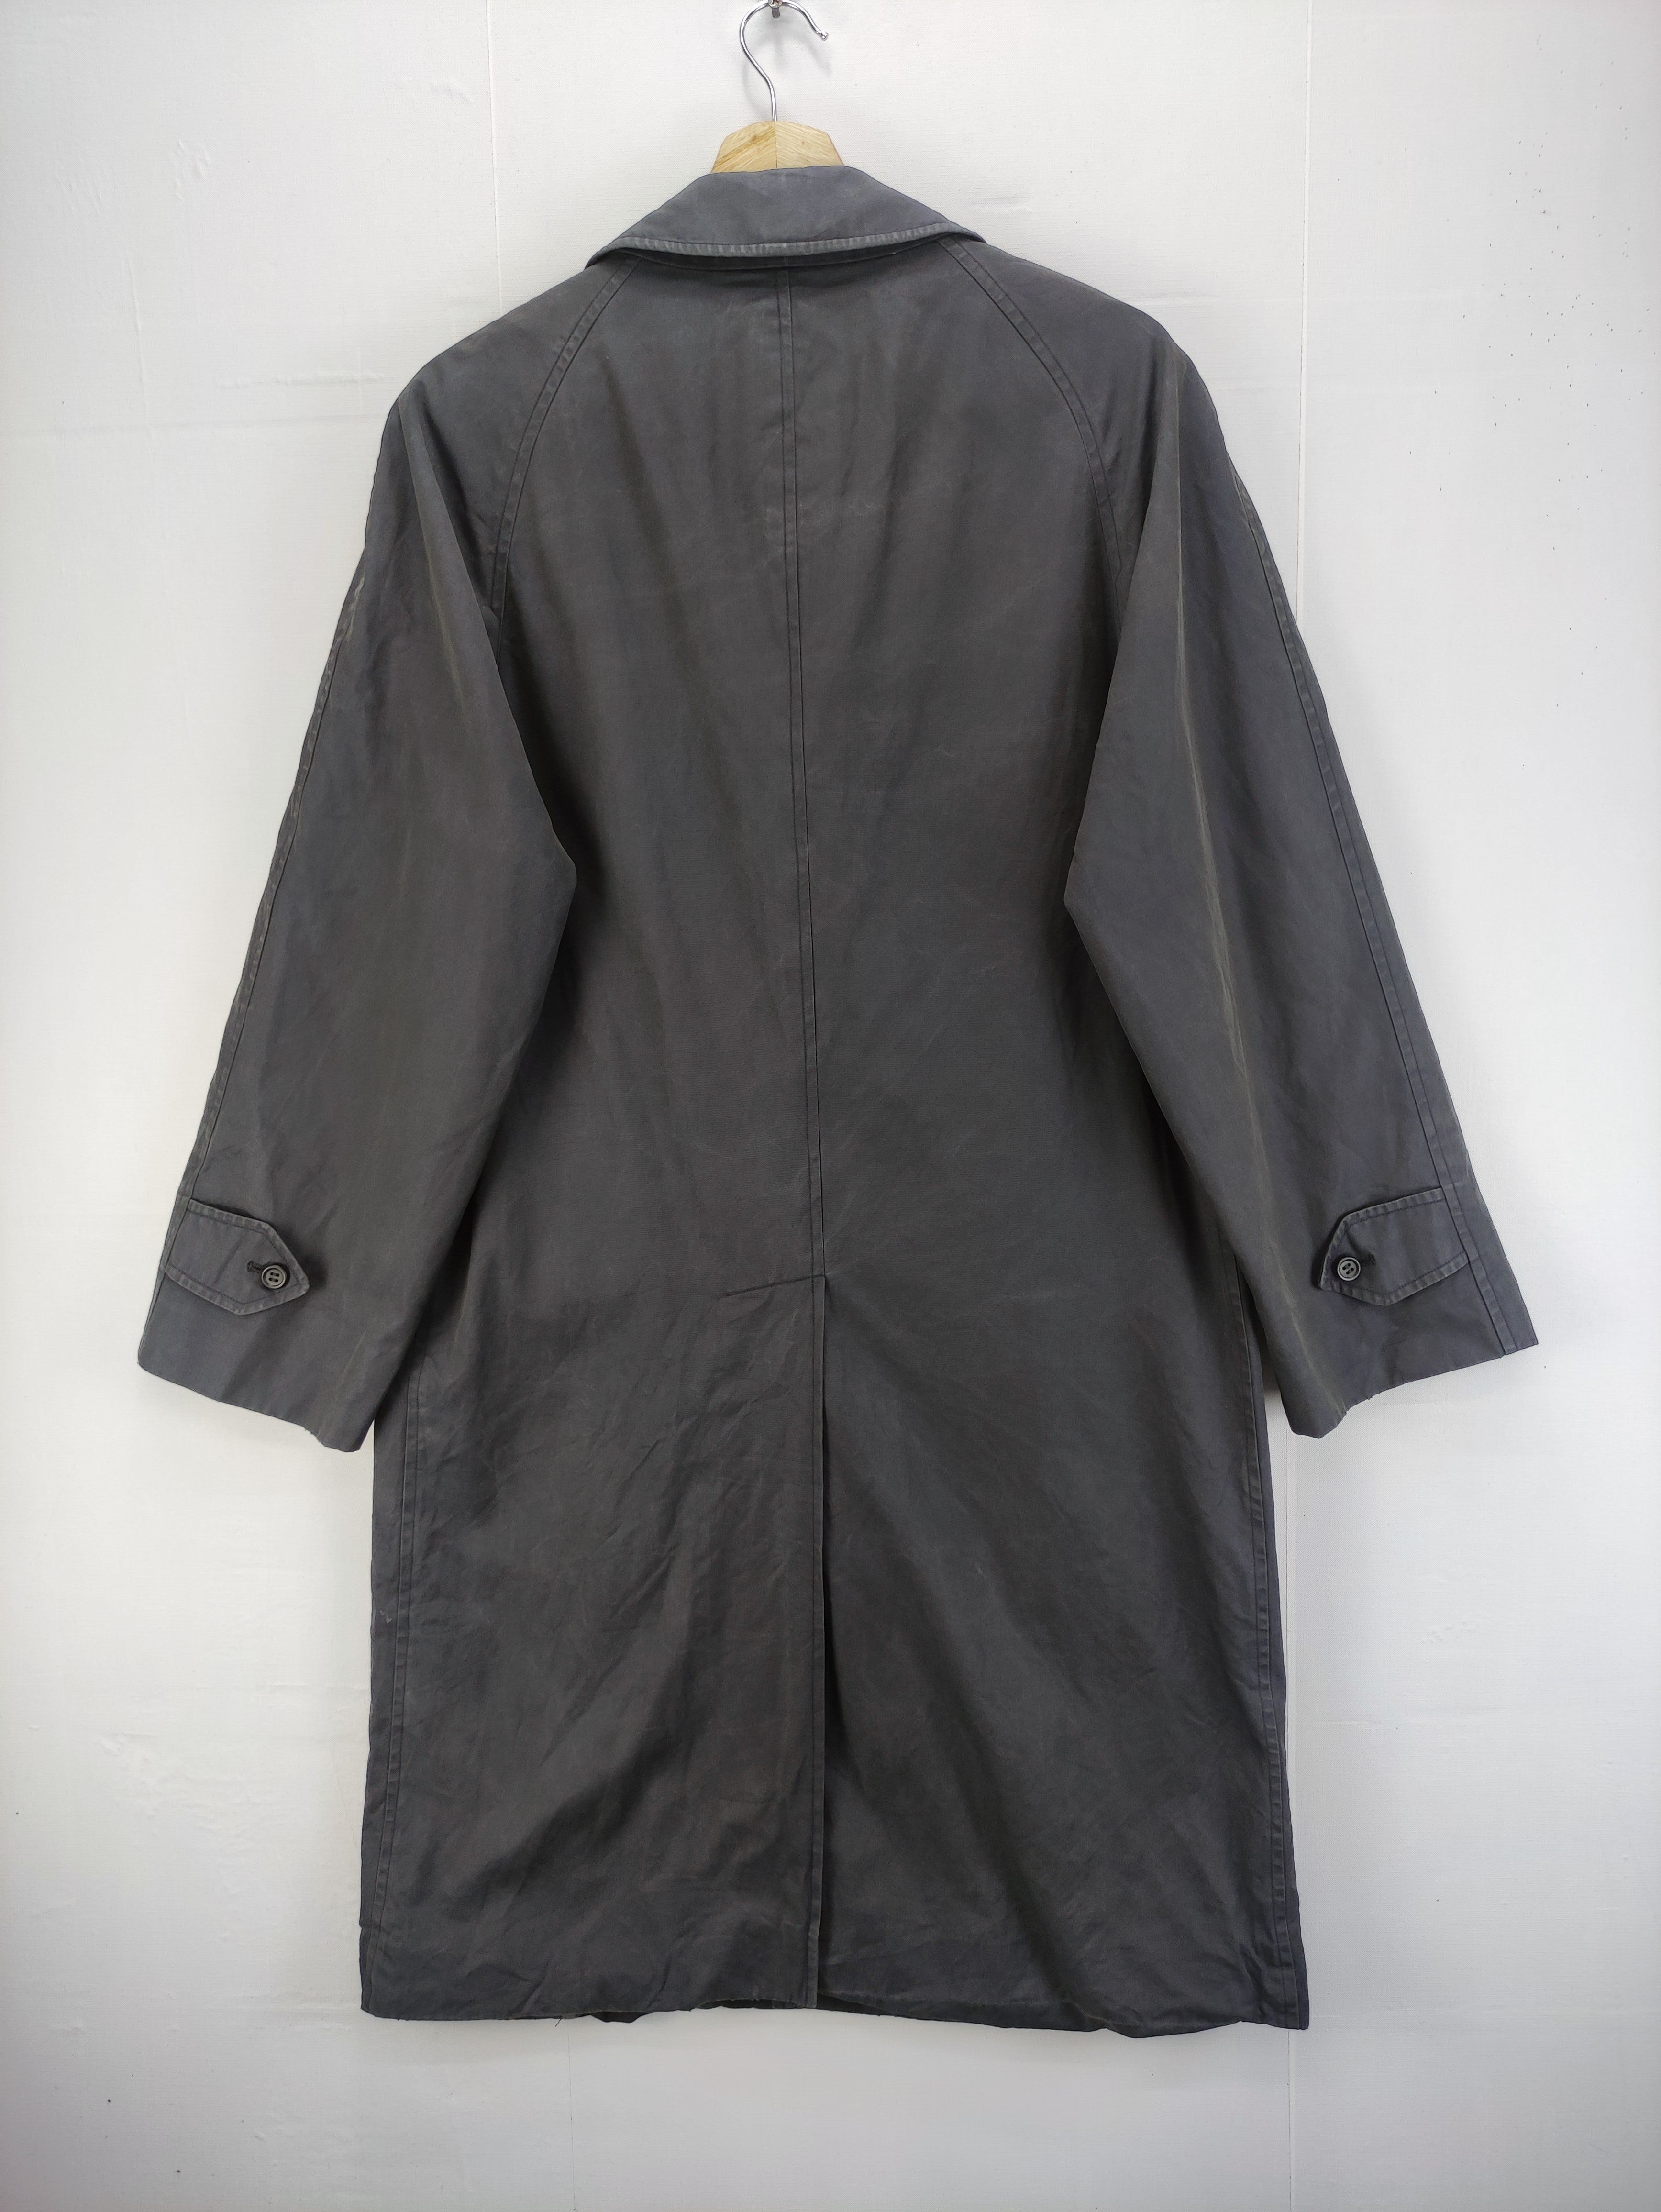 Vintage Burberrys Trench Coat Long Jacket - 7